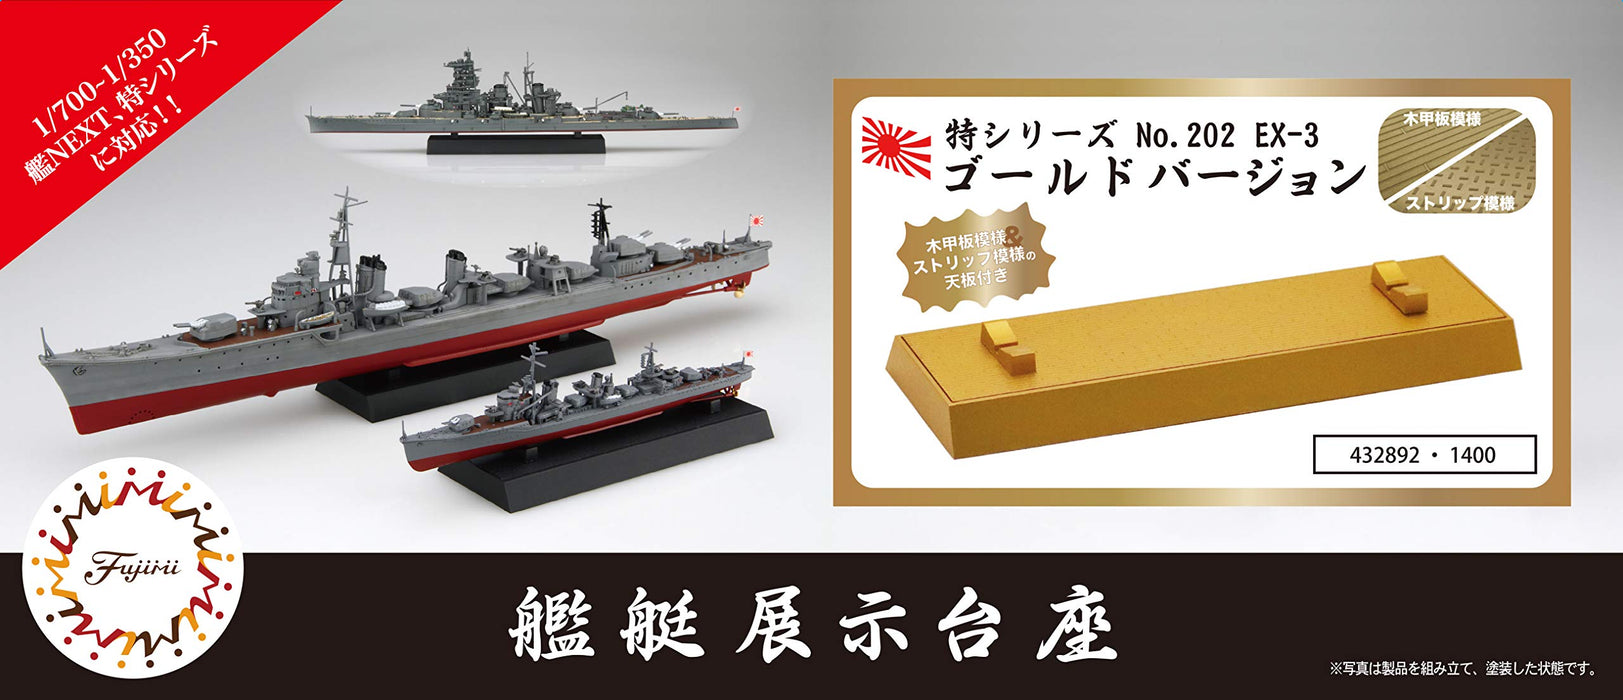 Fujimi Model 1/700 Special Series No.202 Ex-3 Ship Display Pedestal Gold Version Special 202Ex-3